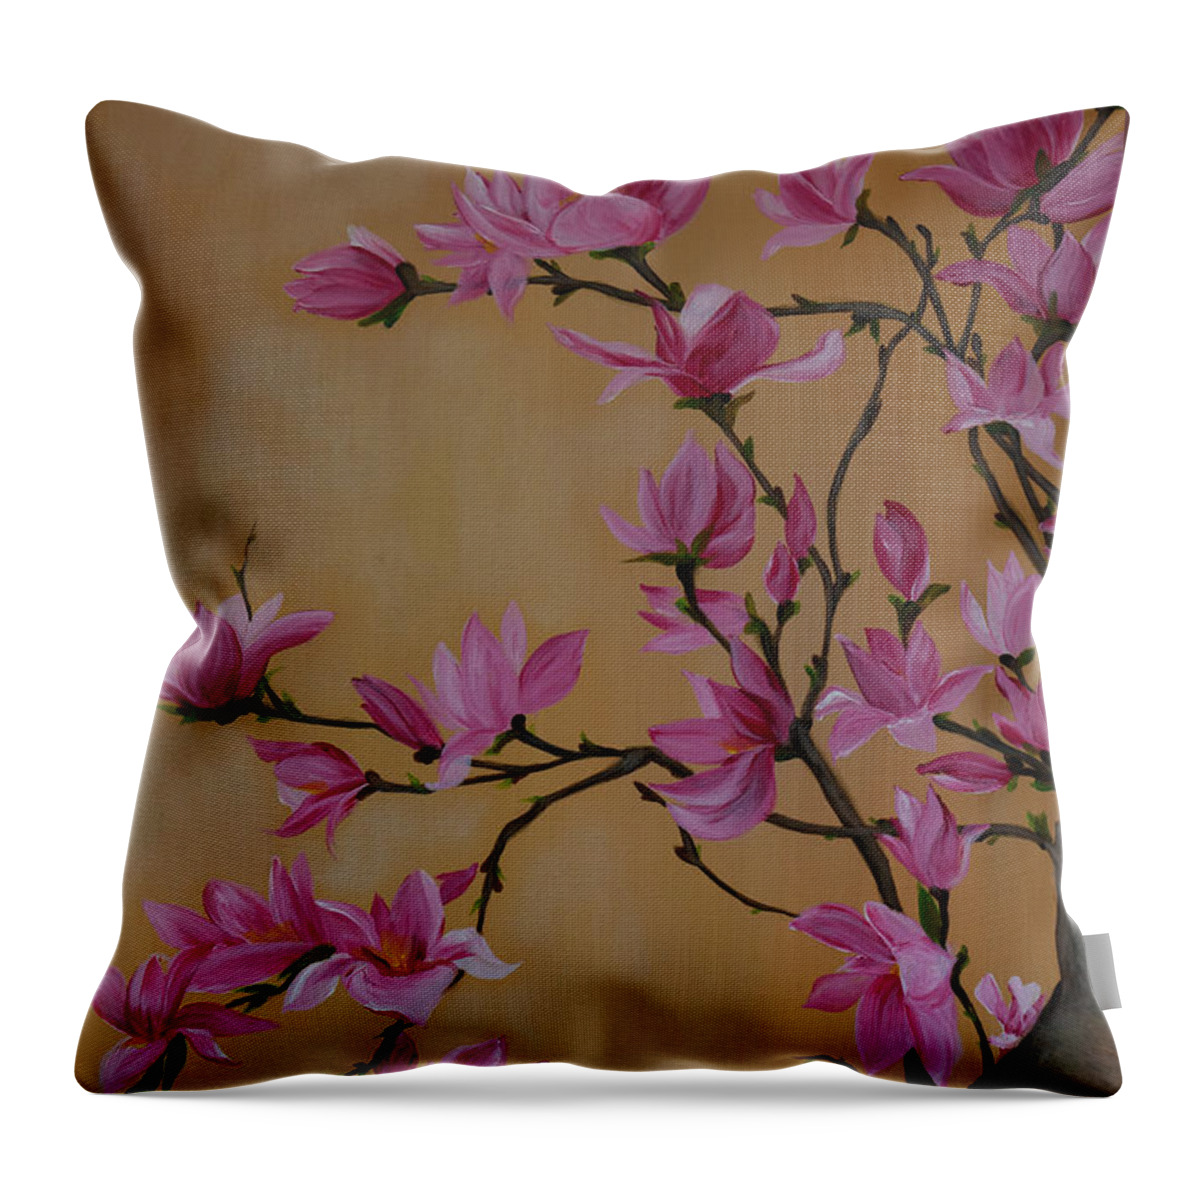 Vivian Casey Throw Pillow featuring the painting Springtime Magnolia by Vivian Casey Fine Art